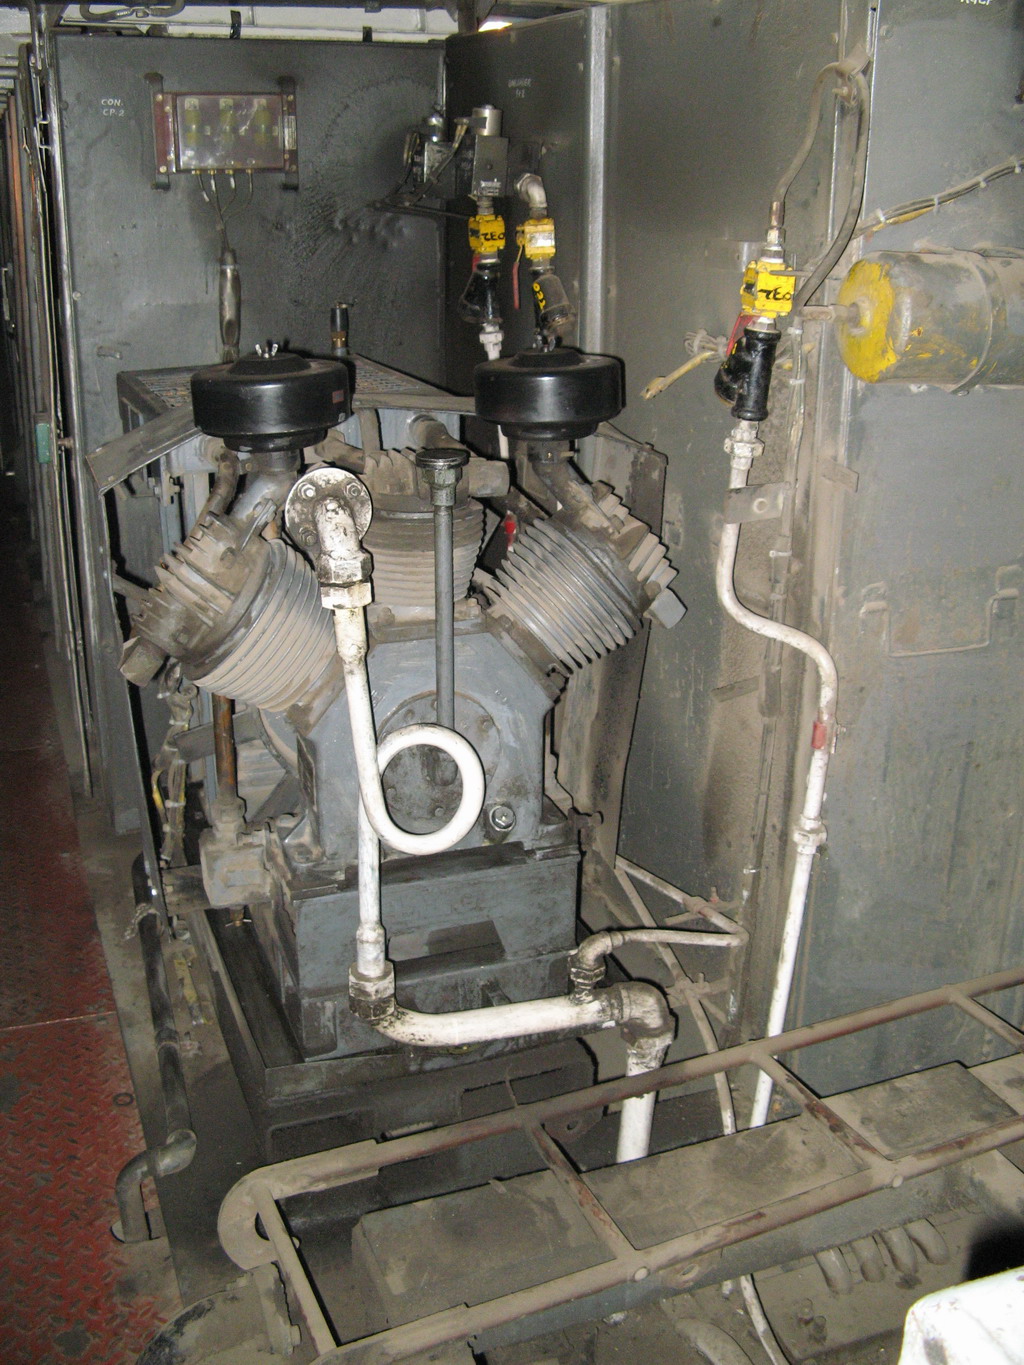 Main air compressor.